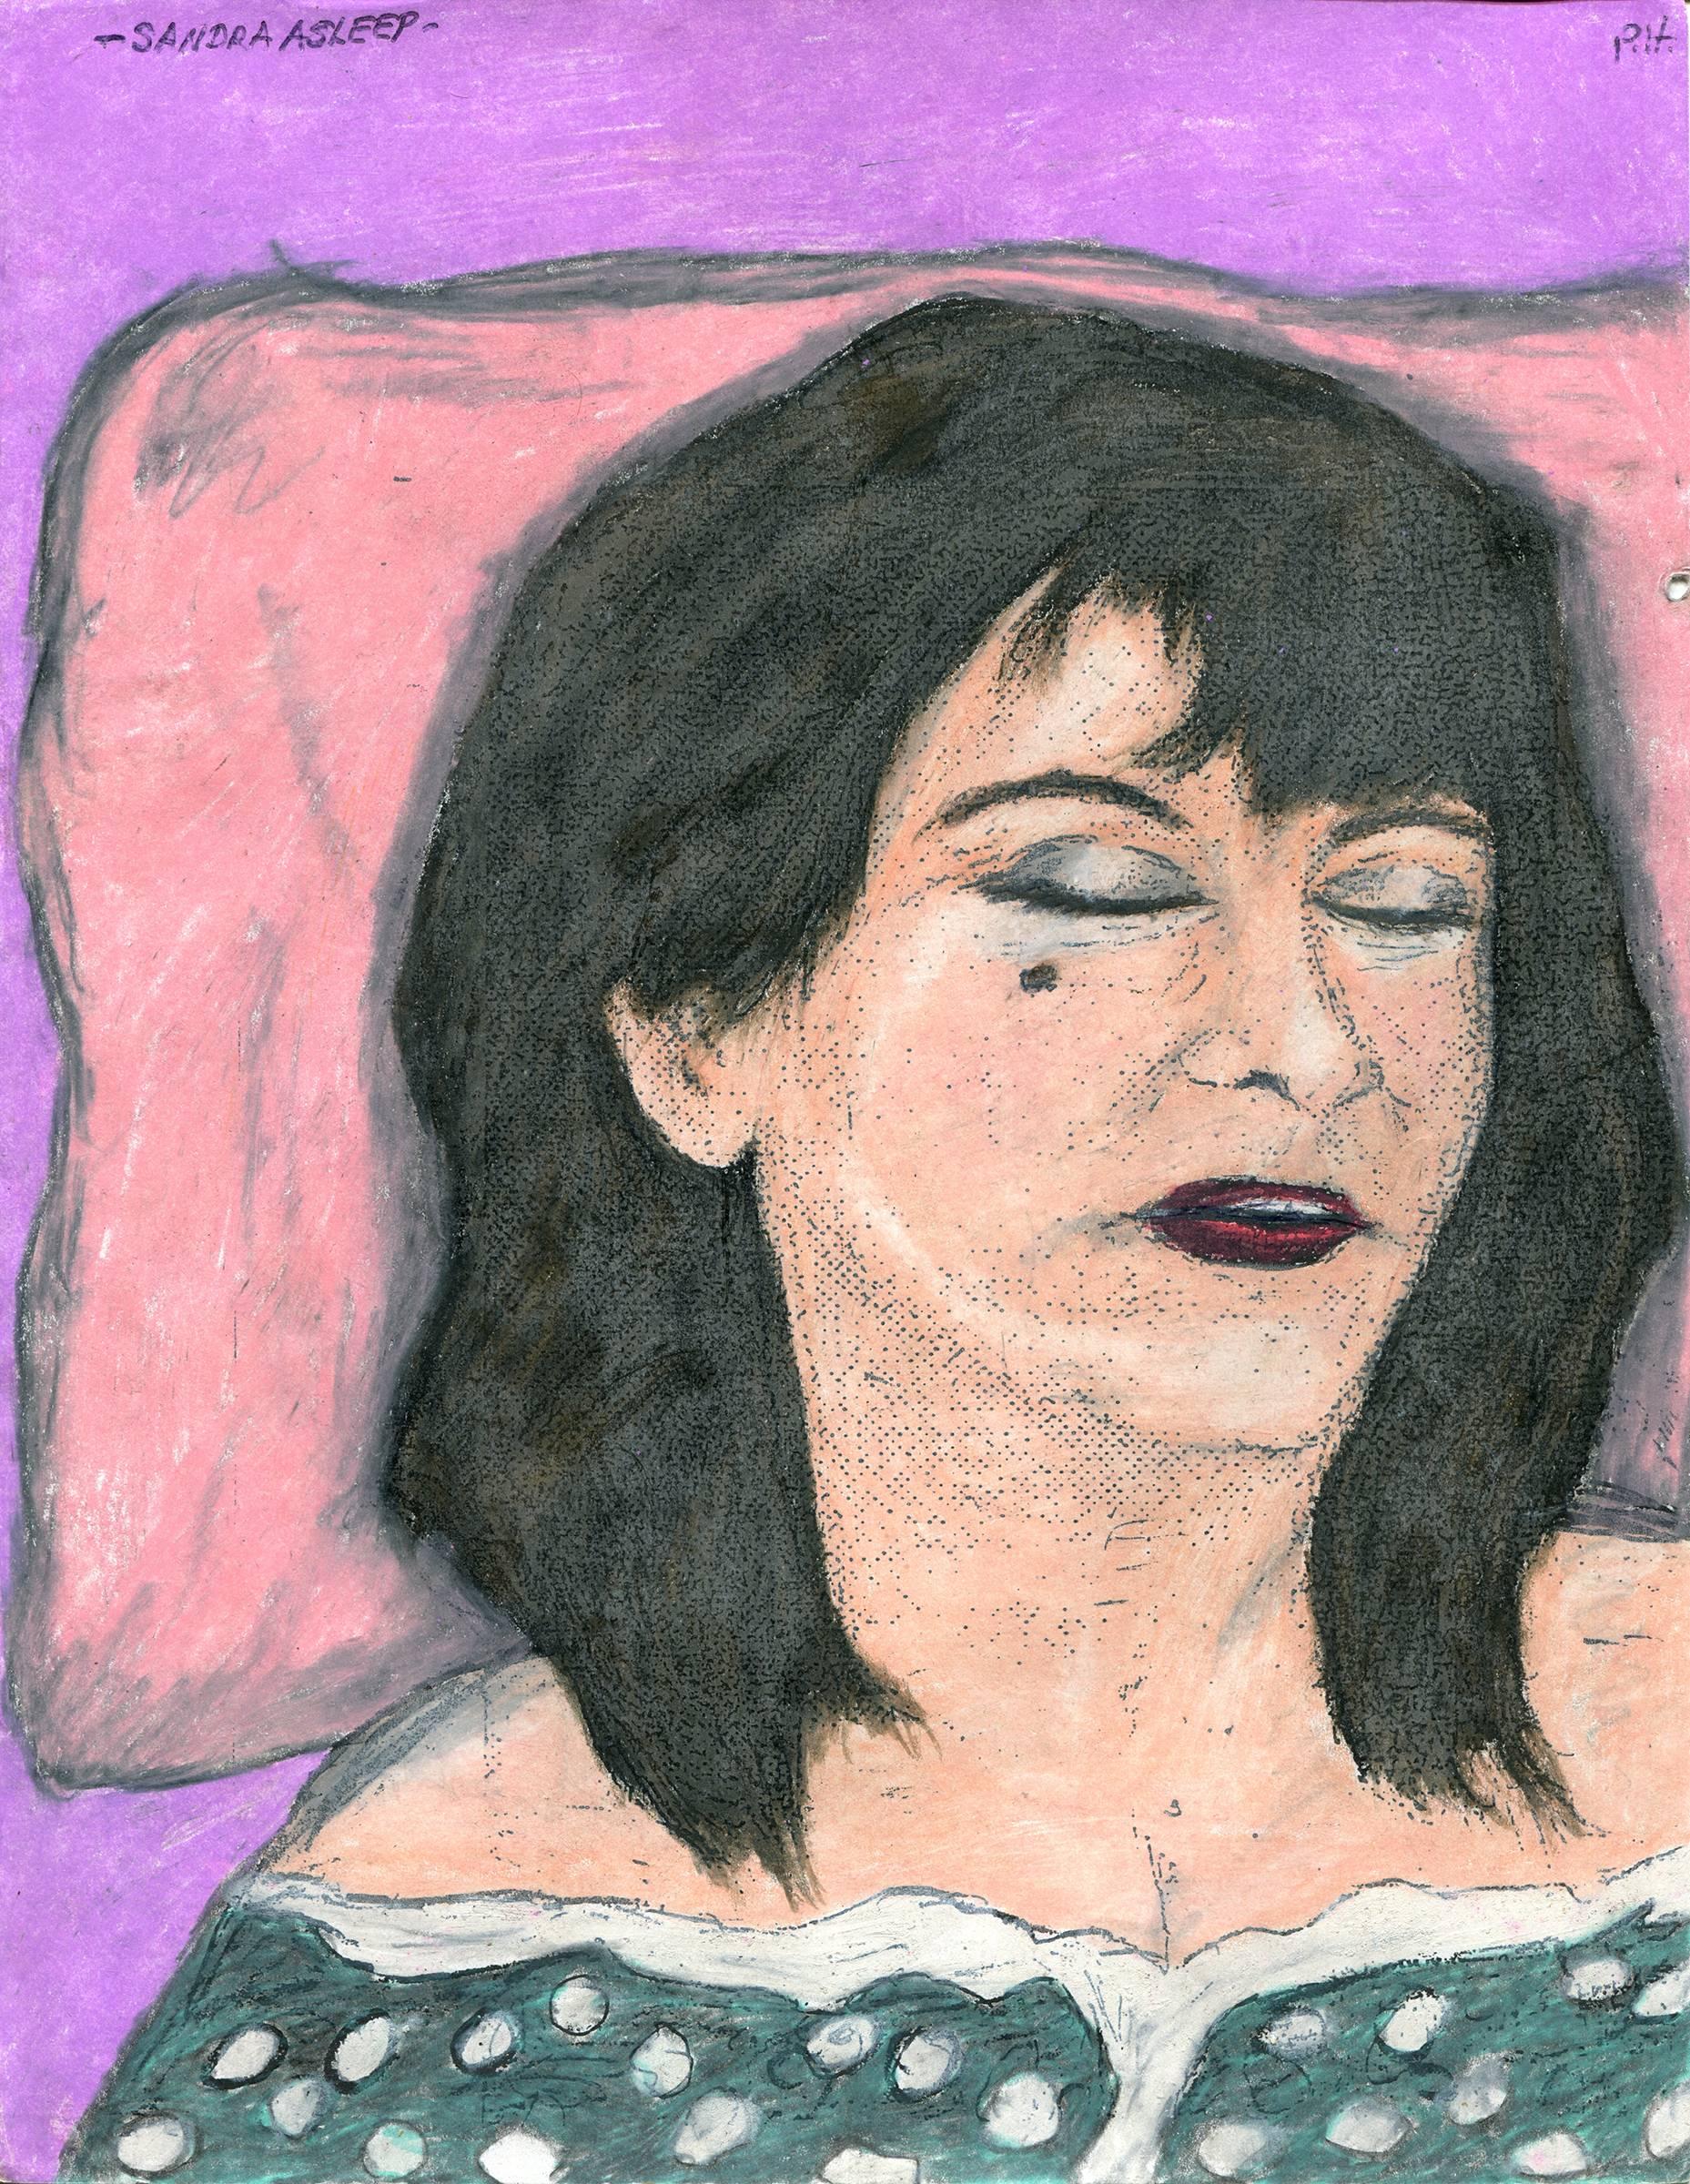 Sandra Asleep - Mixed Media Art by Paul Humphrey